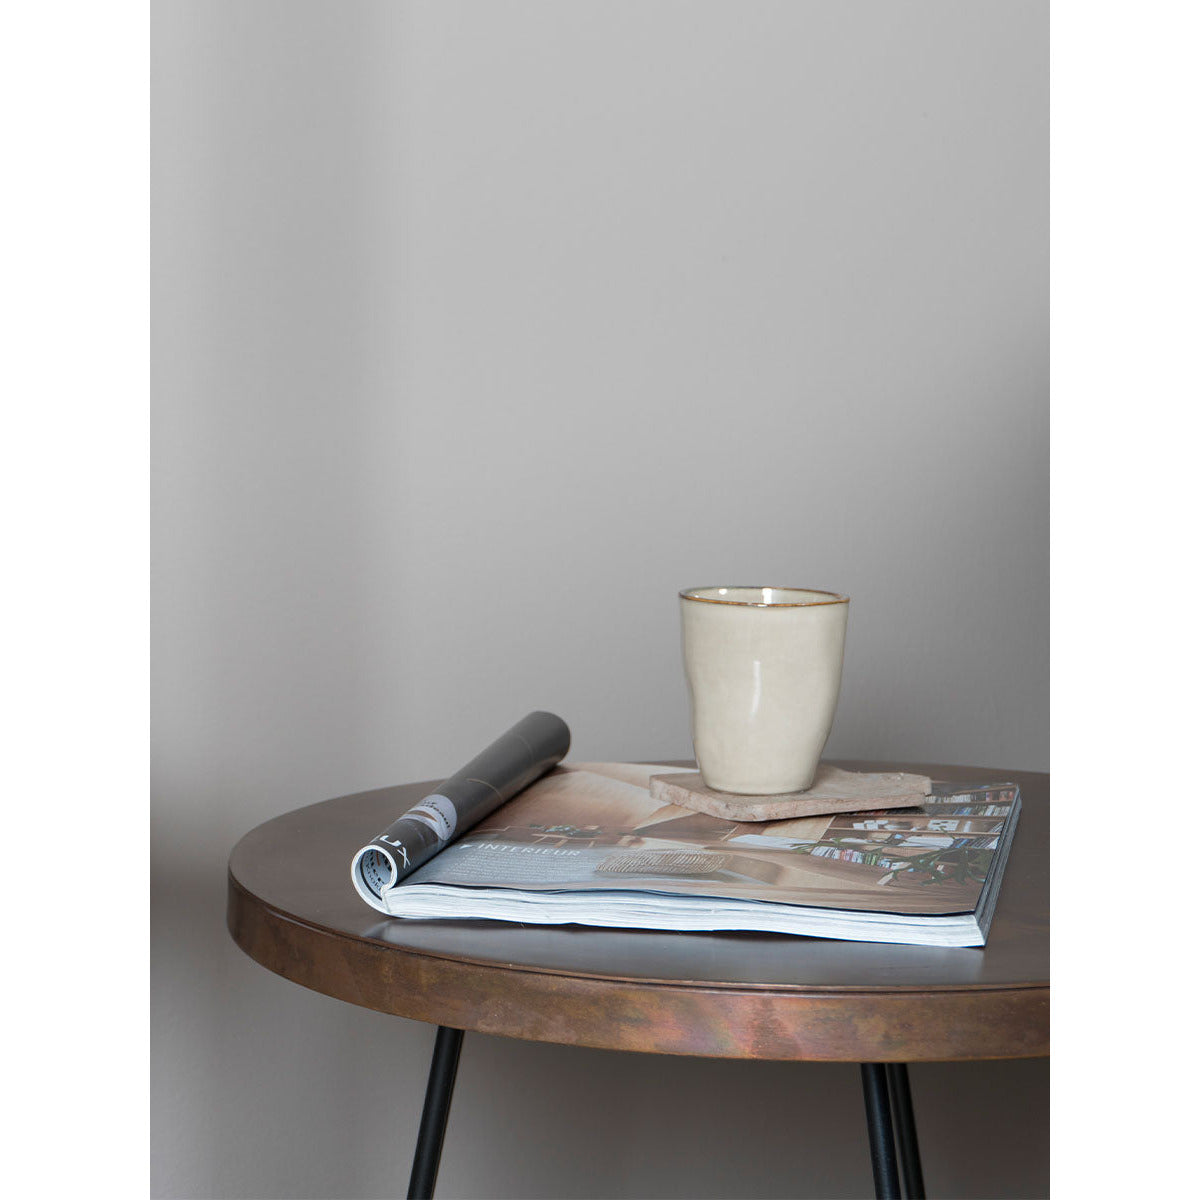 Coffee table Palma - 49 x 49 cm - Copper